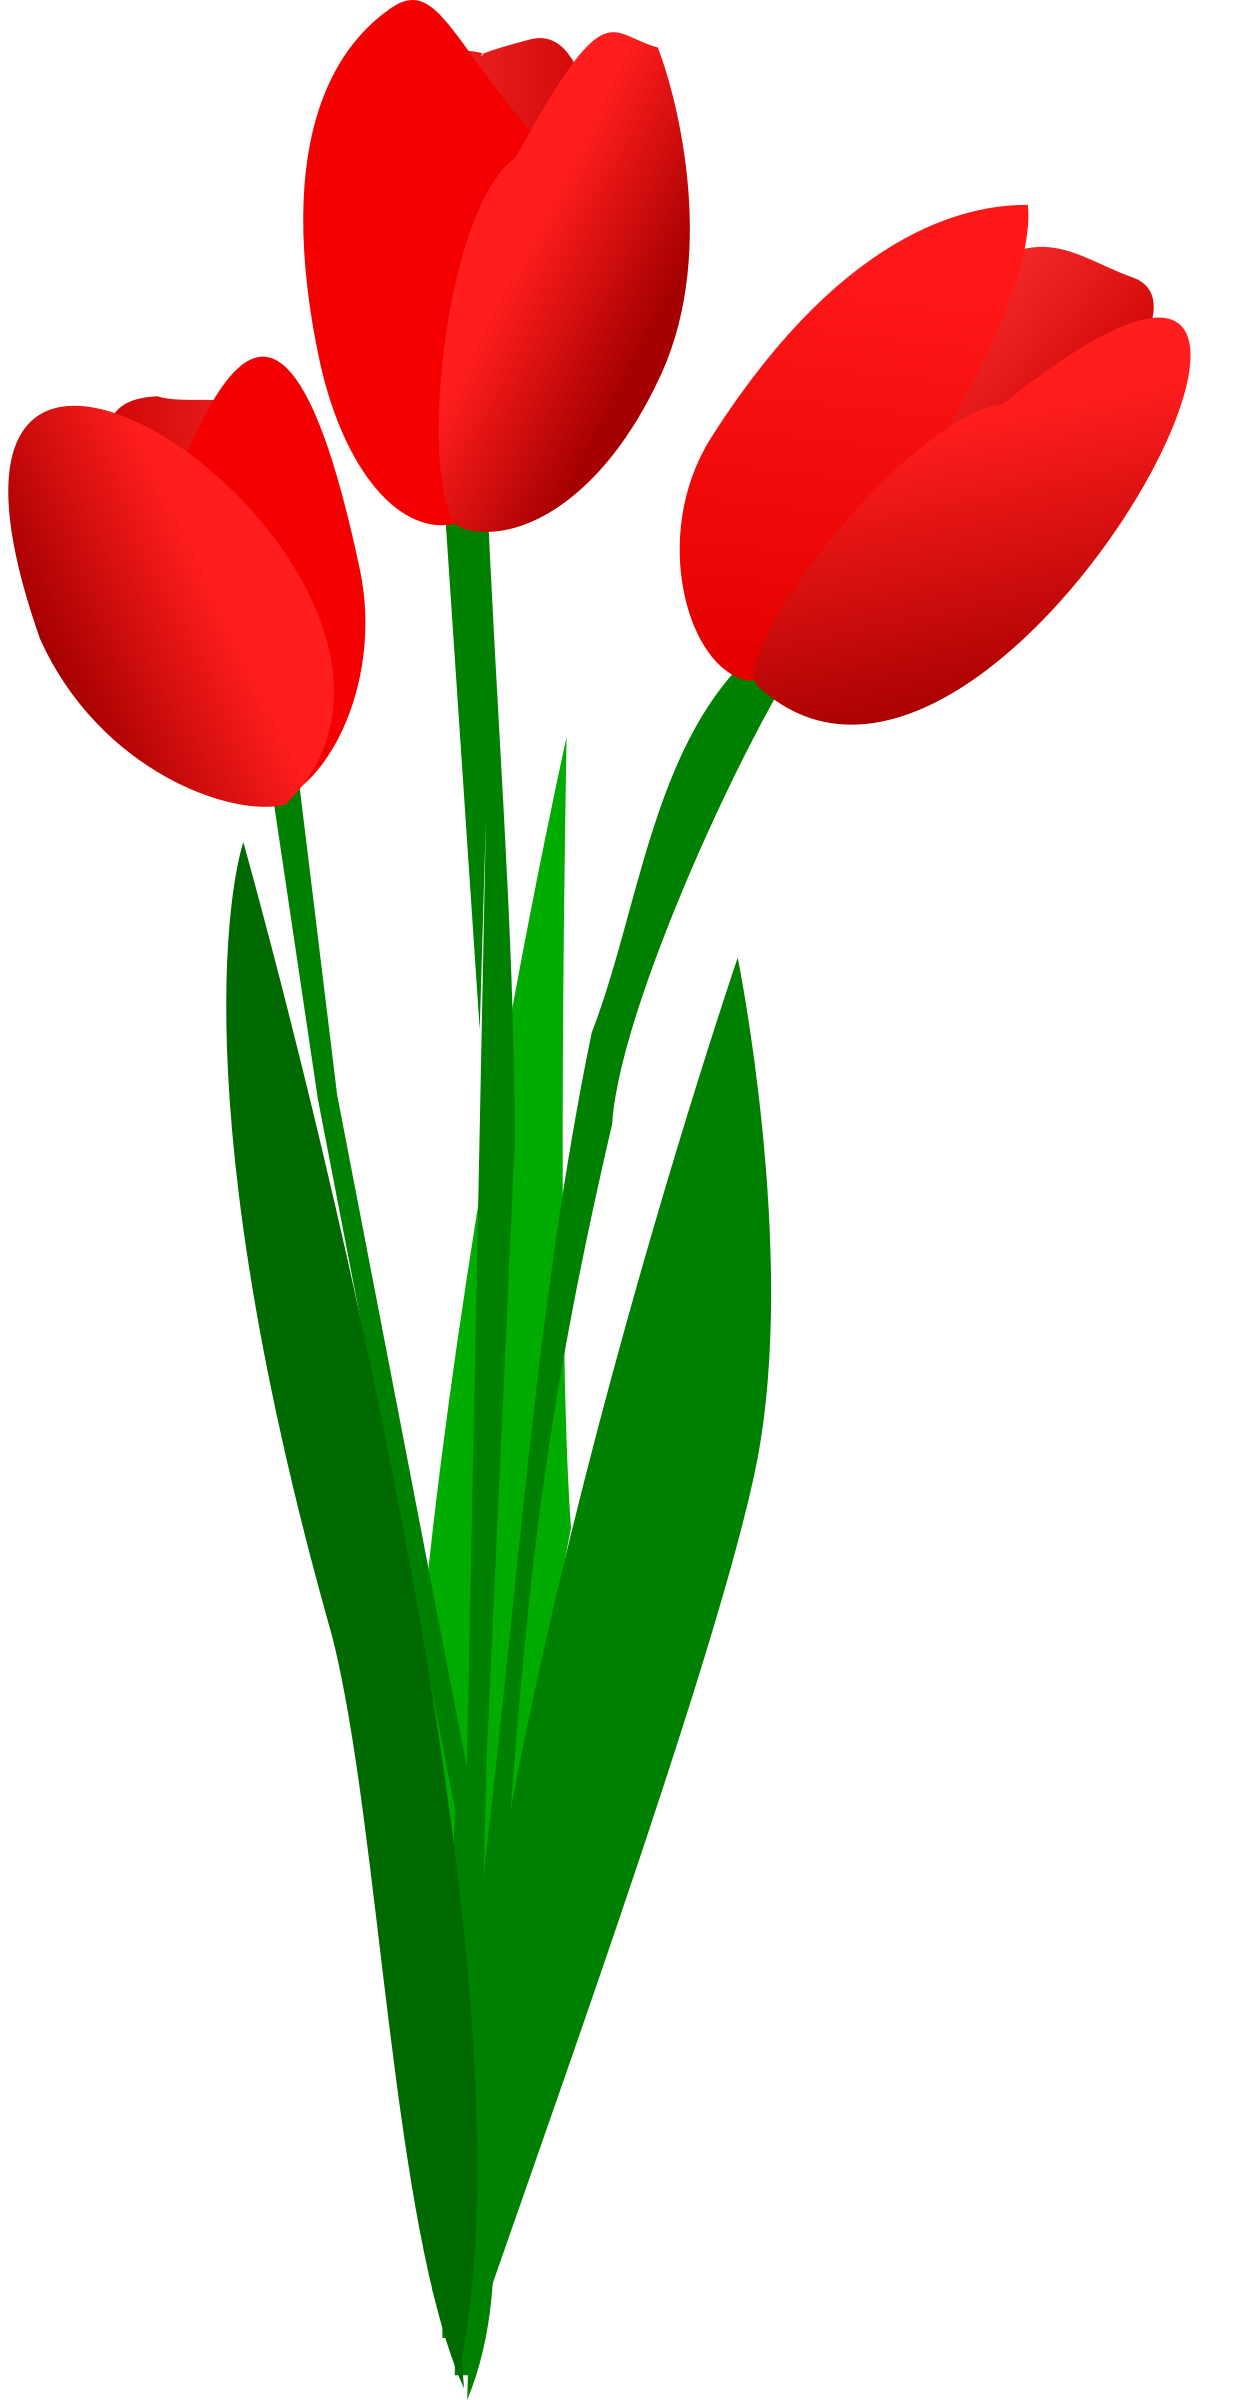 Three red tulips hoa. Daisies clipart tulip